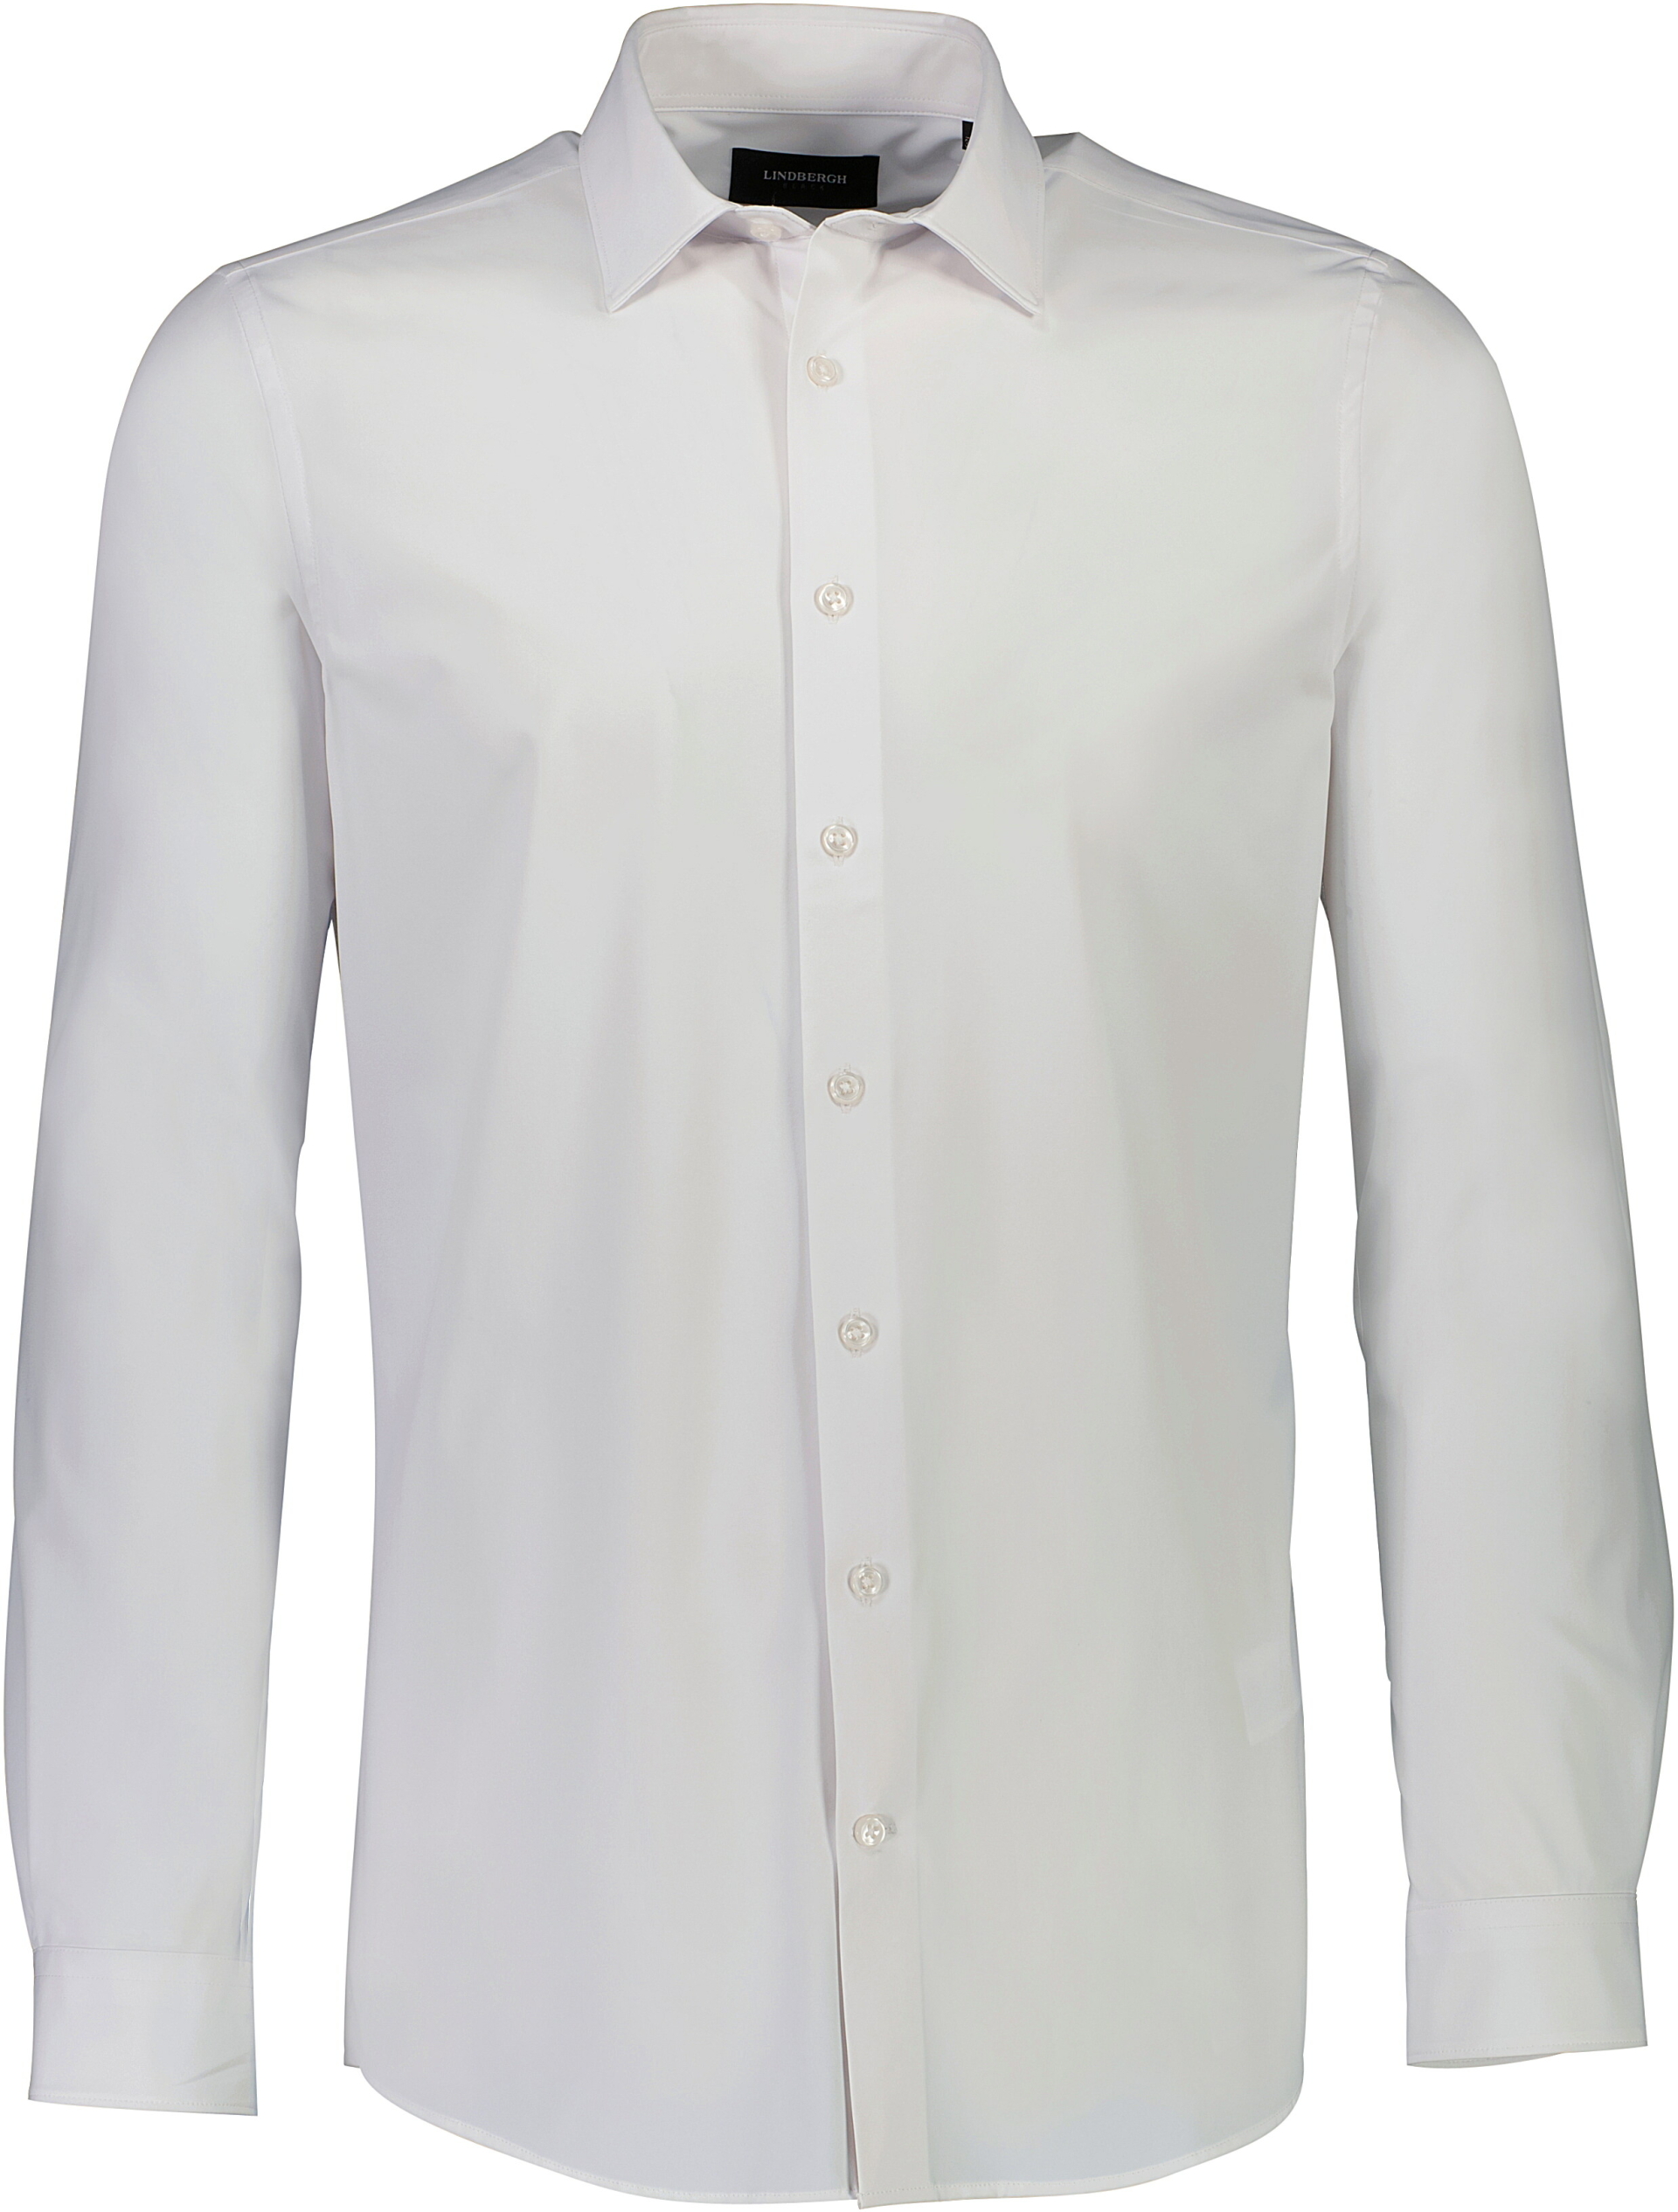 Lindbergh Business casual shirt white / white